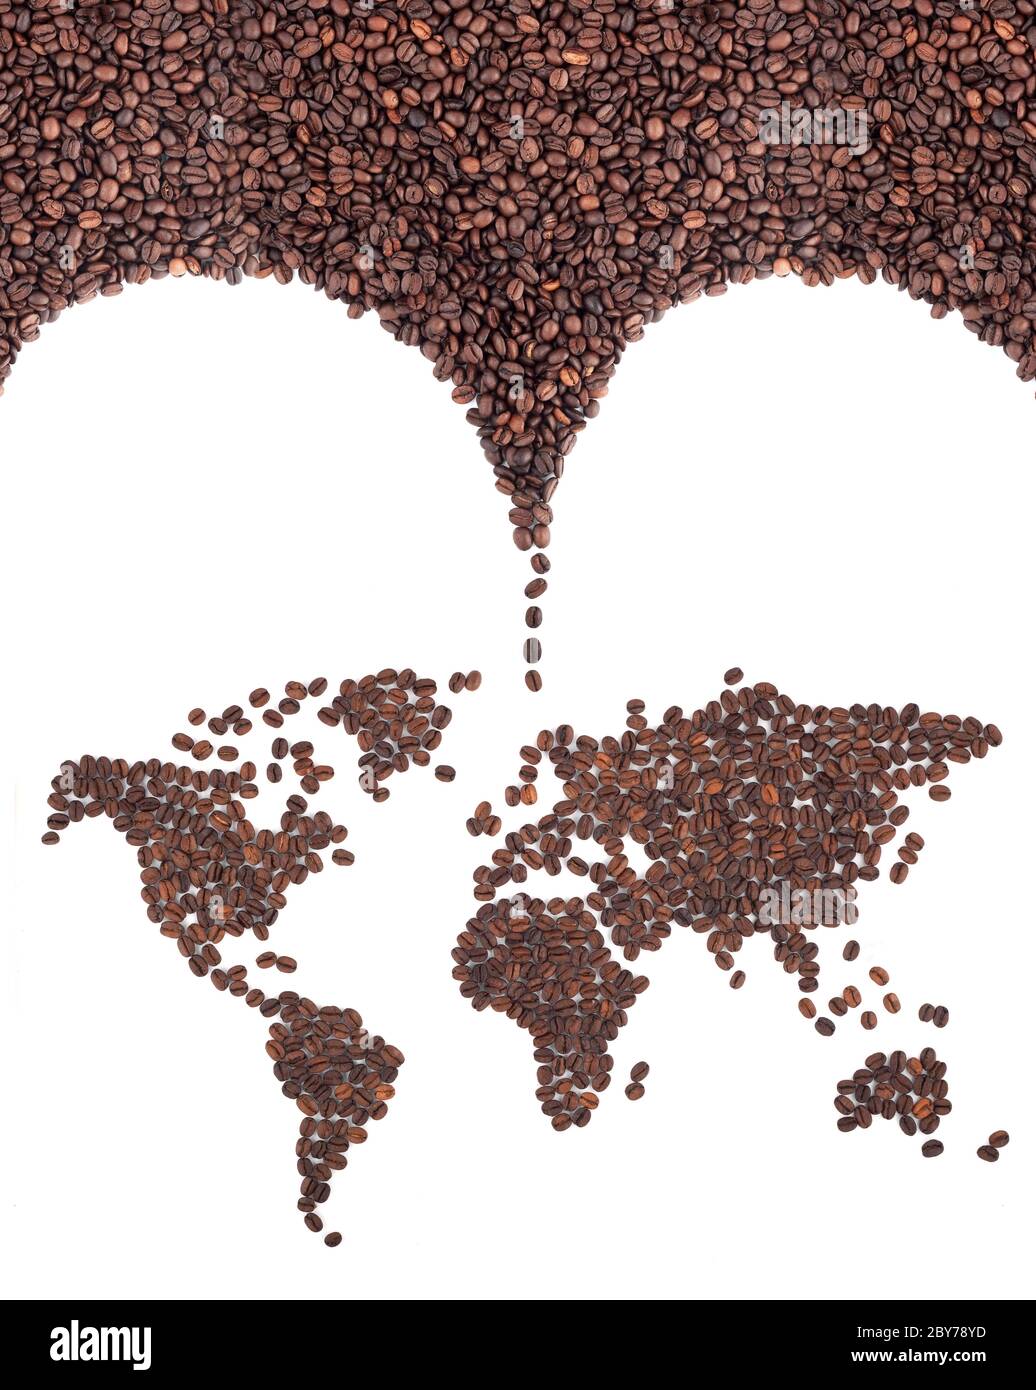 Coffee map Stock Photo